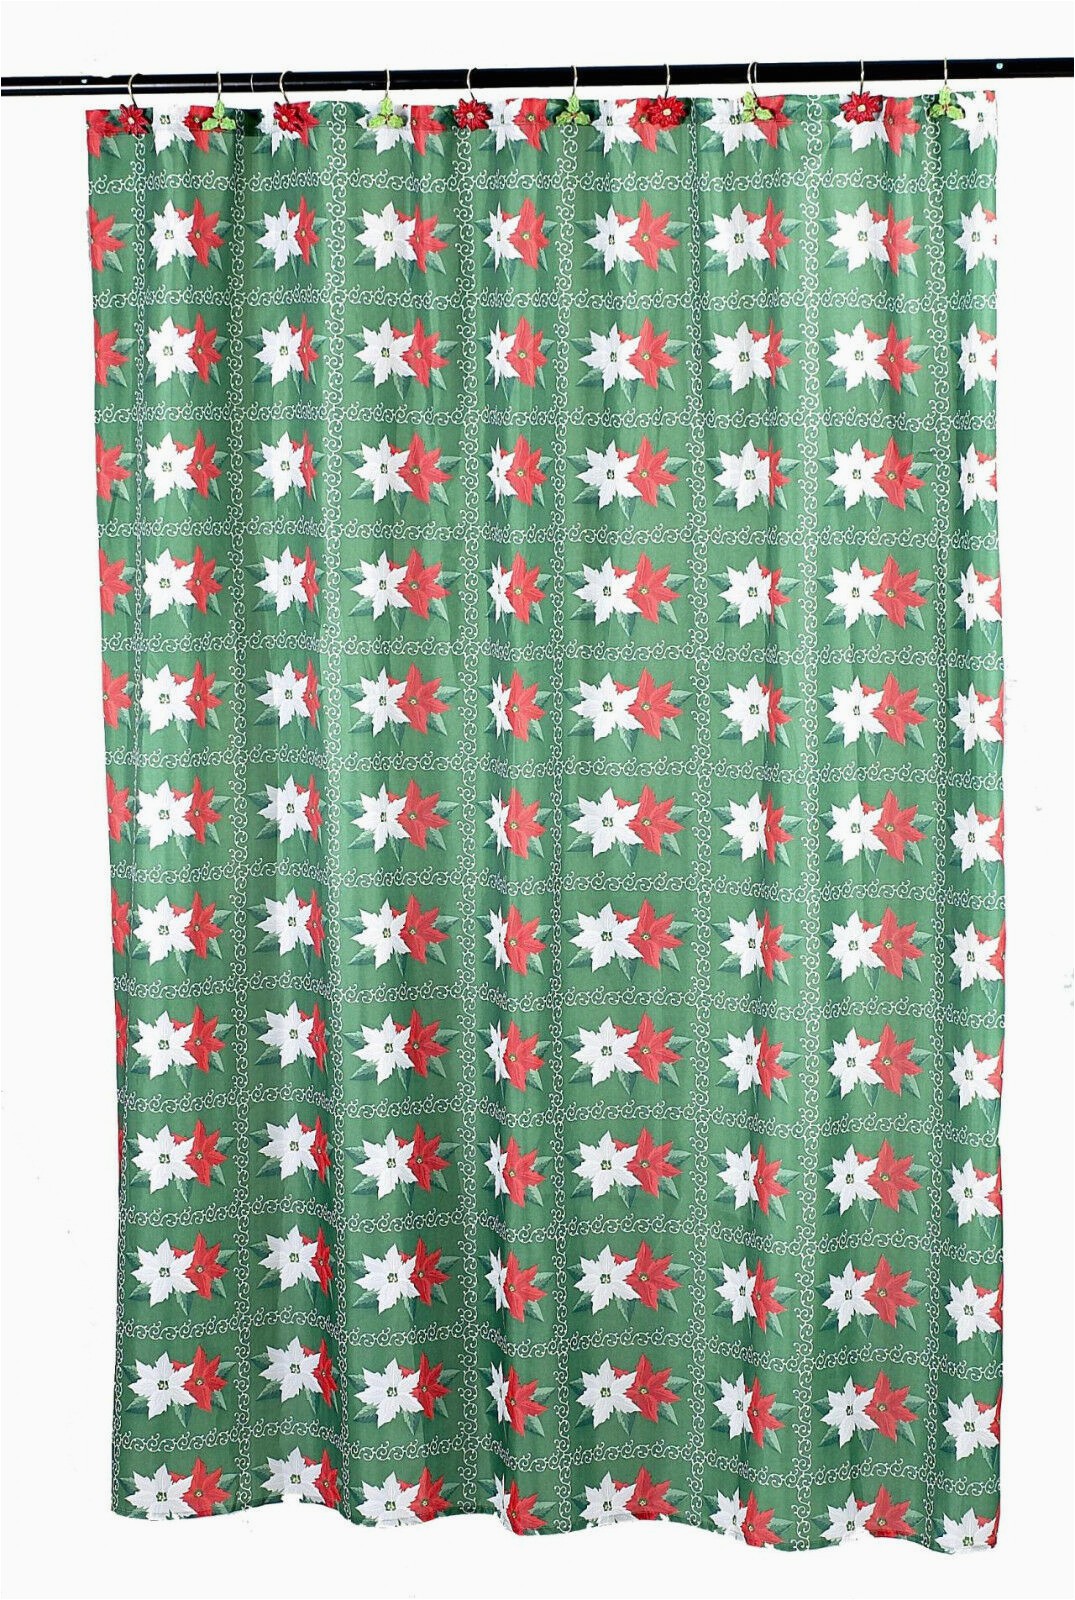 Lenox Holiday Nouveau Bath Rug Holiday Christmas Winter Poinsettia Fabric Shower Curtain Standard Size 70 X 72